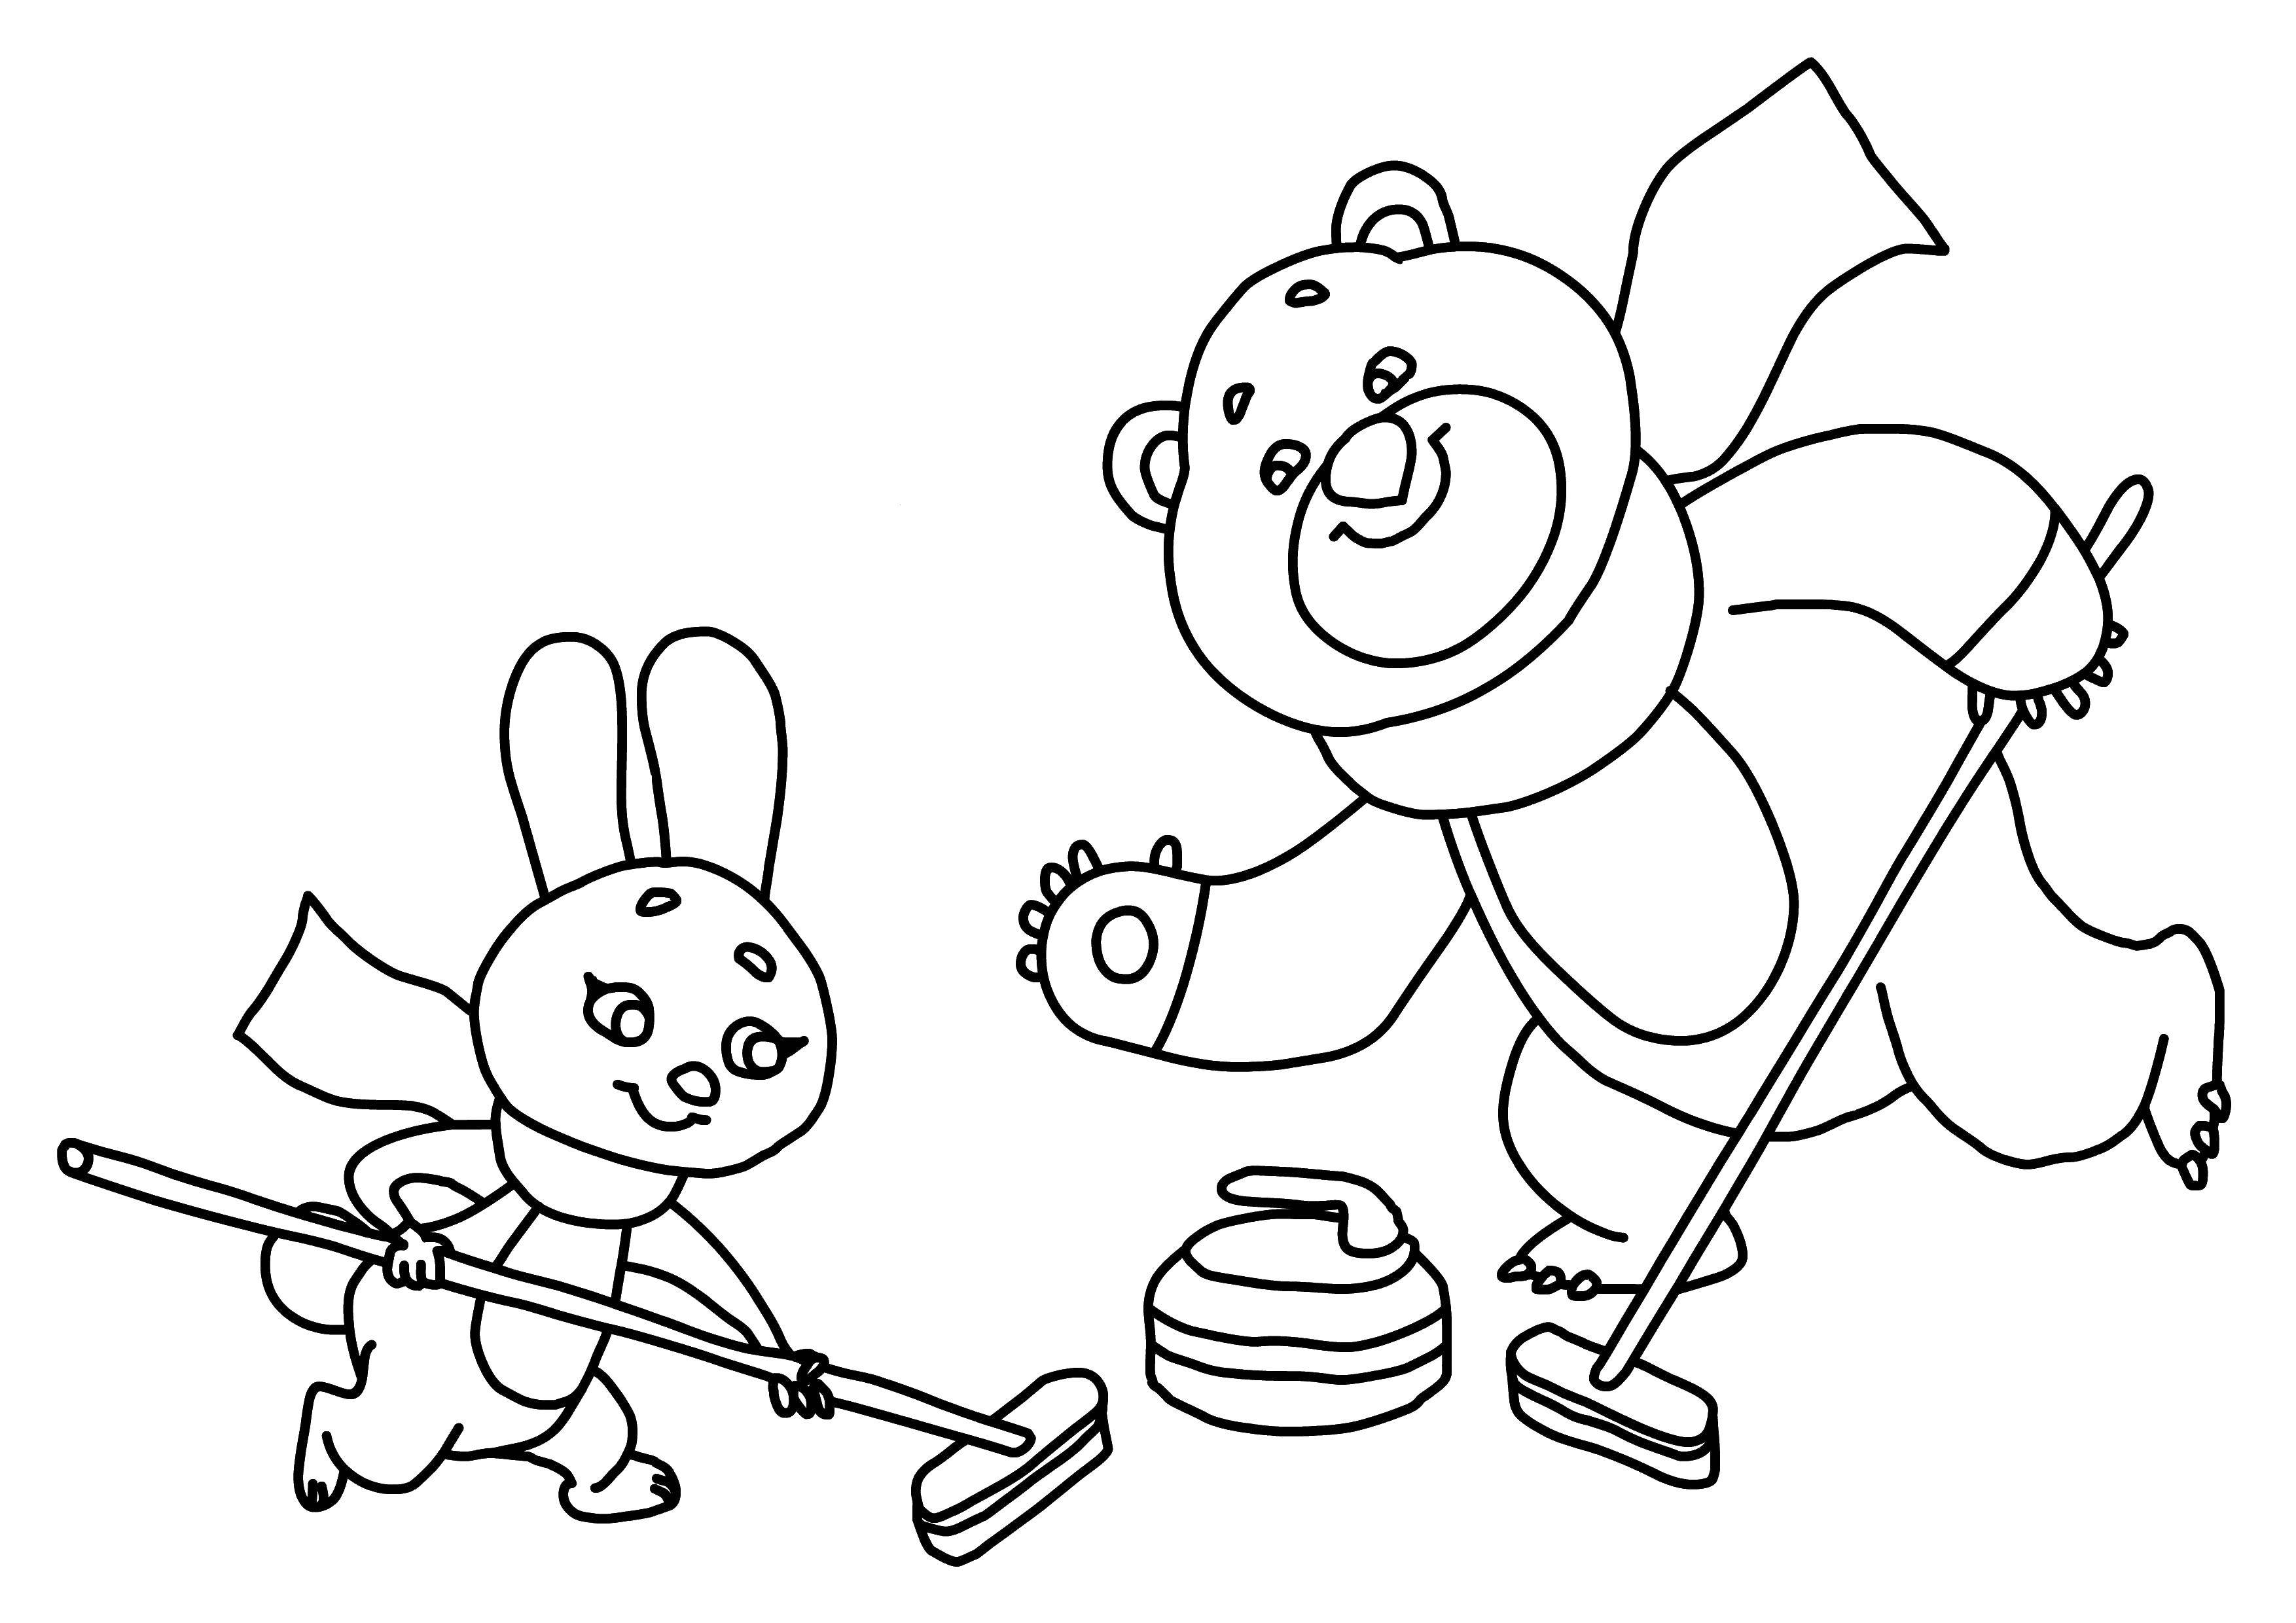 Название: Раскраска Олимпийский мишка и заяц играют в керлинг. Категория: олимпийские игры. Теги: мишка, заяц, керлинг.